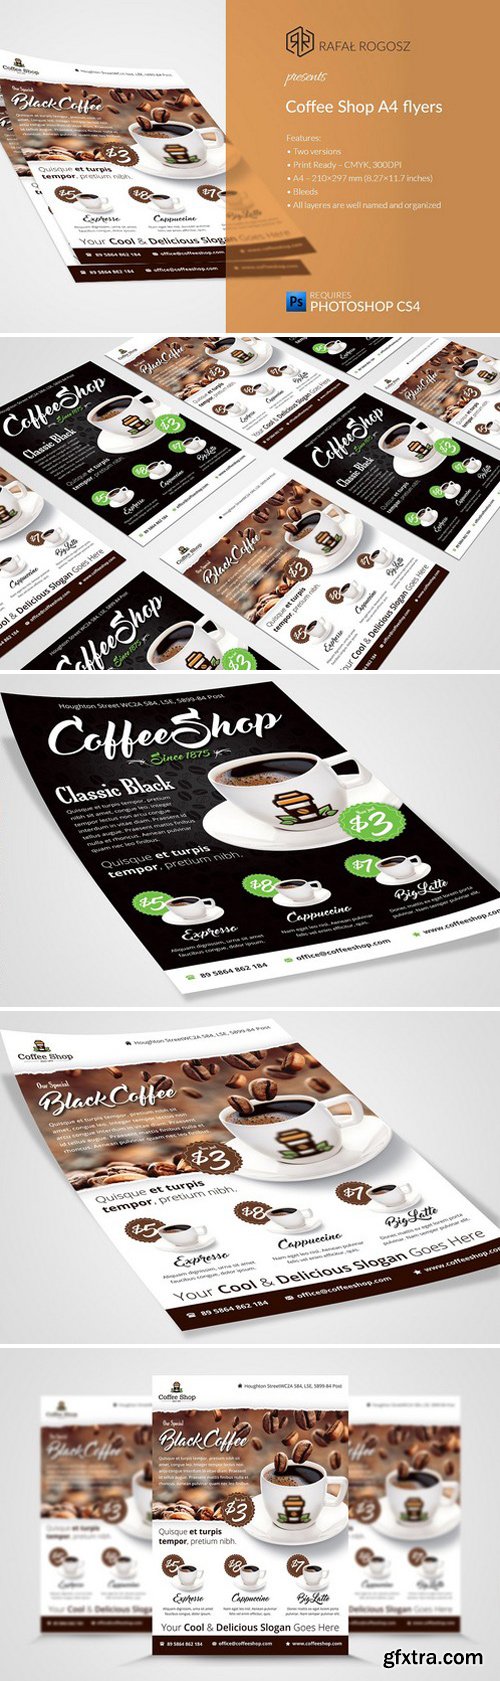 CM - Coffee Shop Flyer Templates 1869233